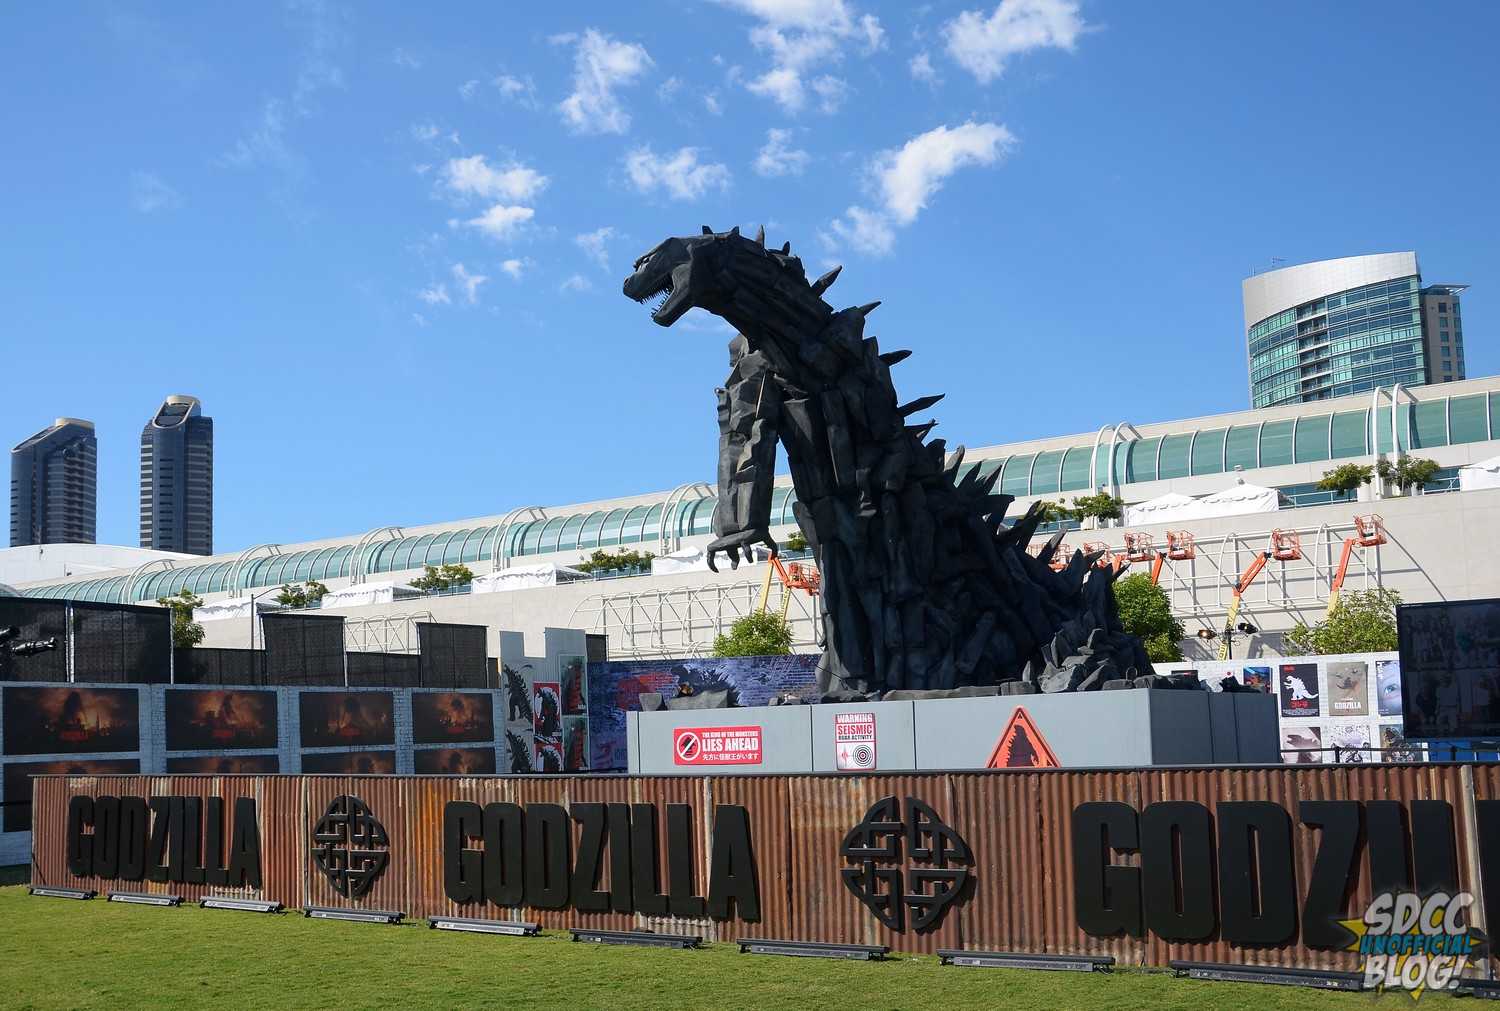 Godzilla Offsite Event - SDCC 2014